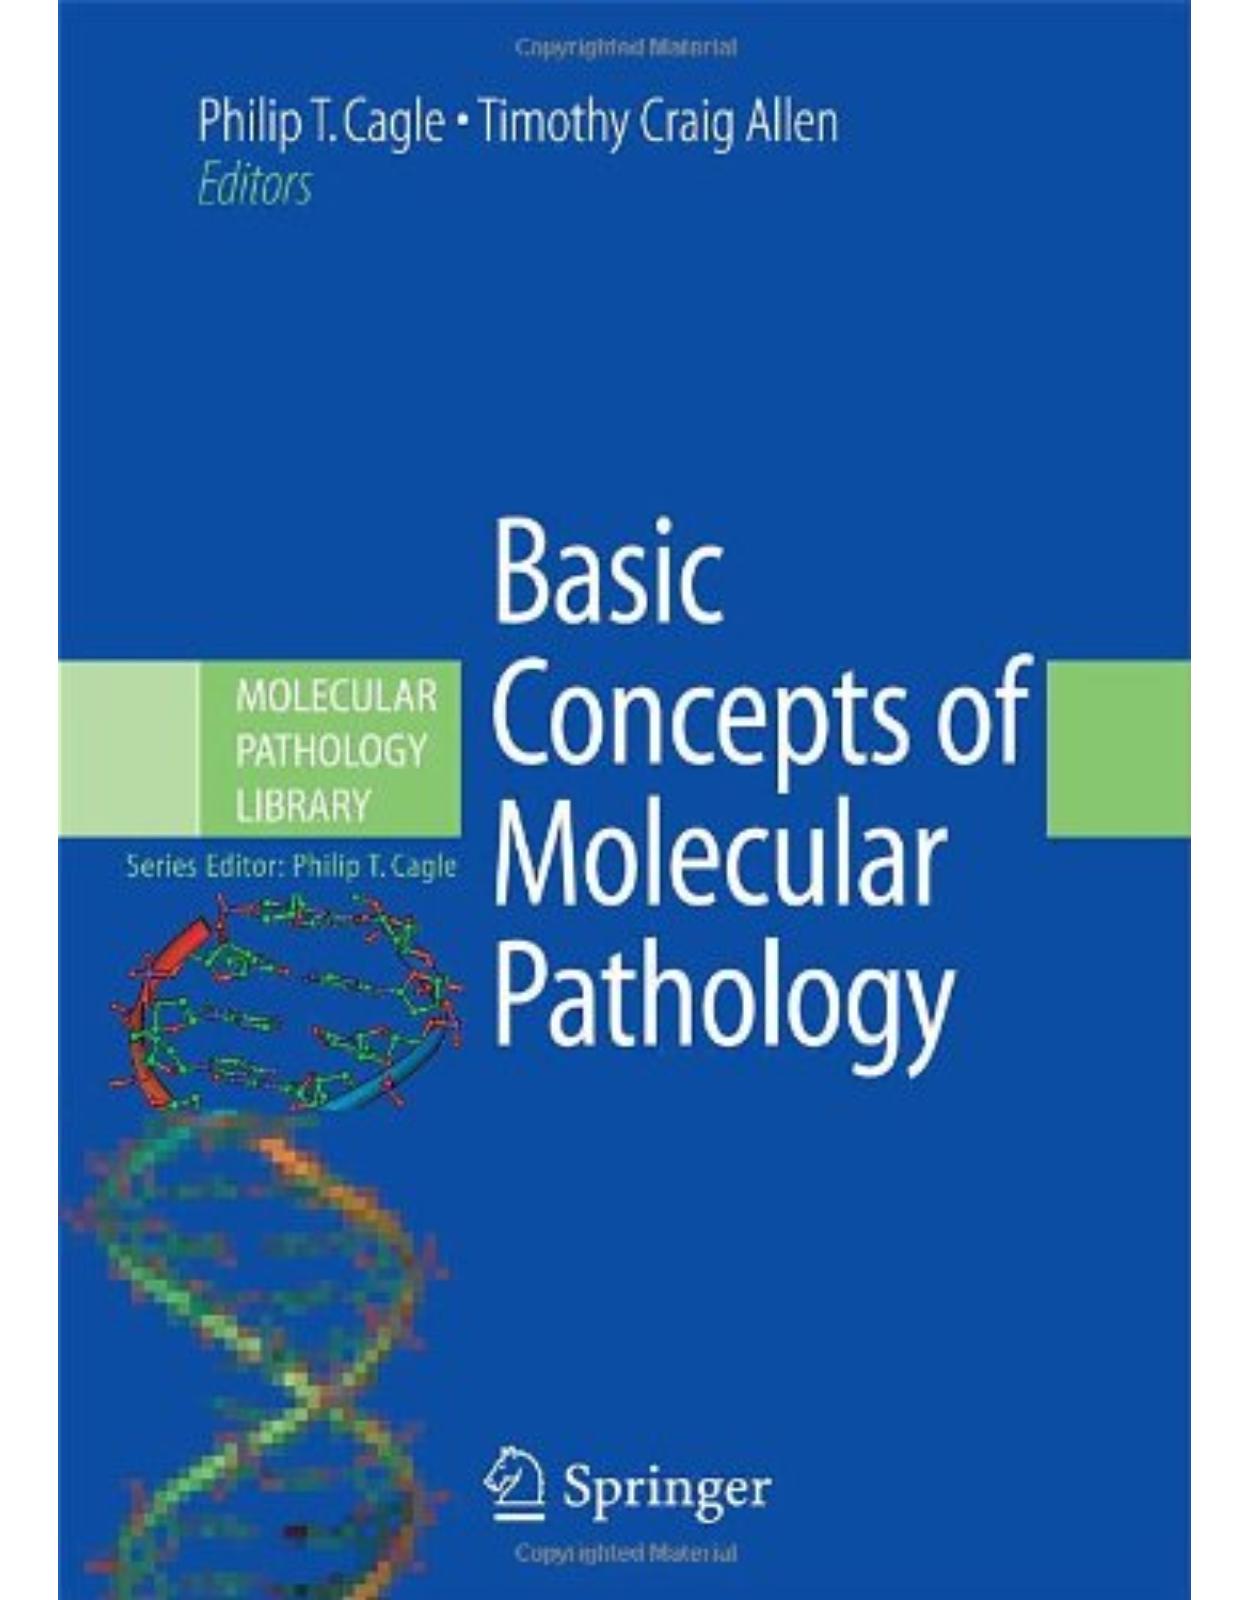 Basic Concepts of Molecular Pathology (Molecular Pathology Library) 